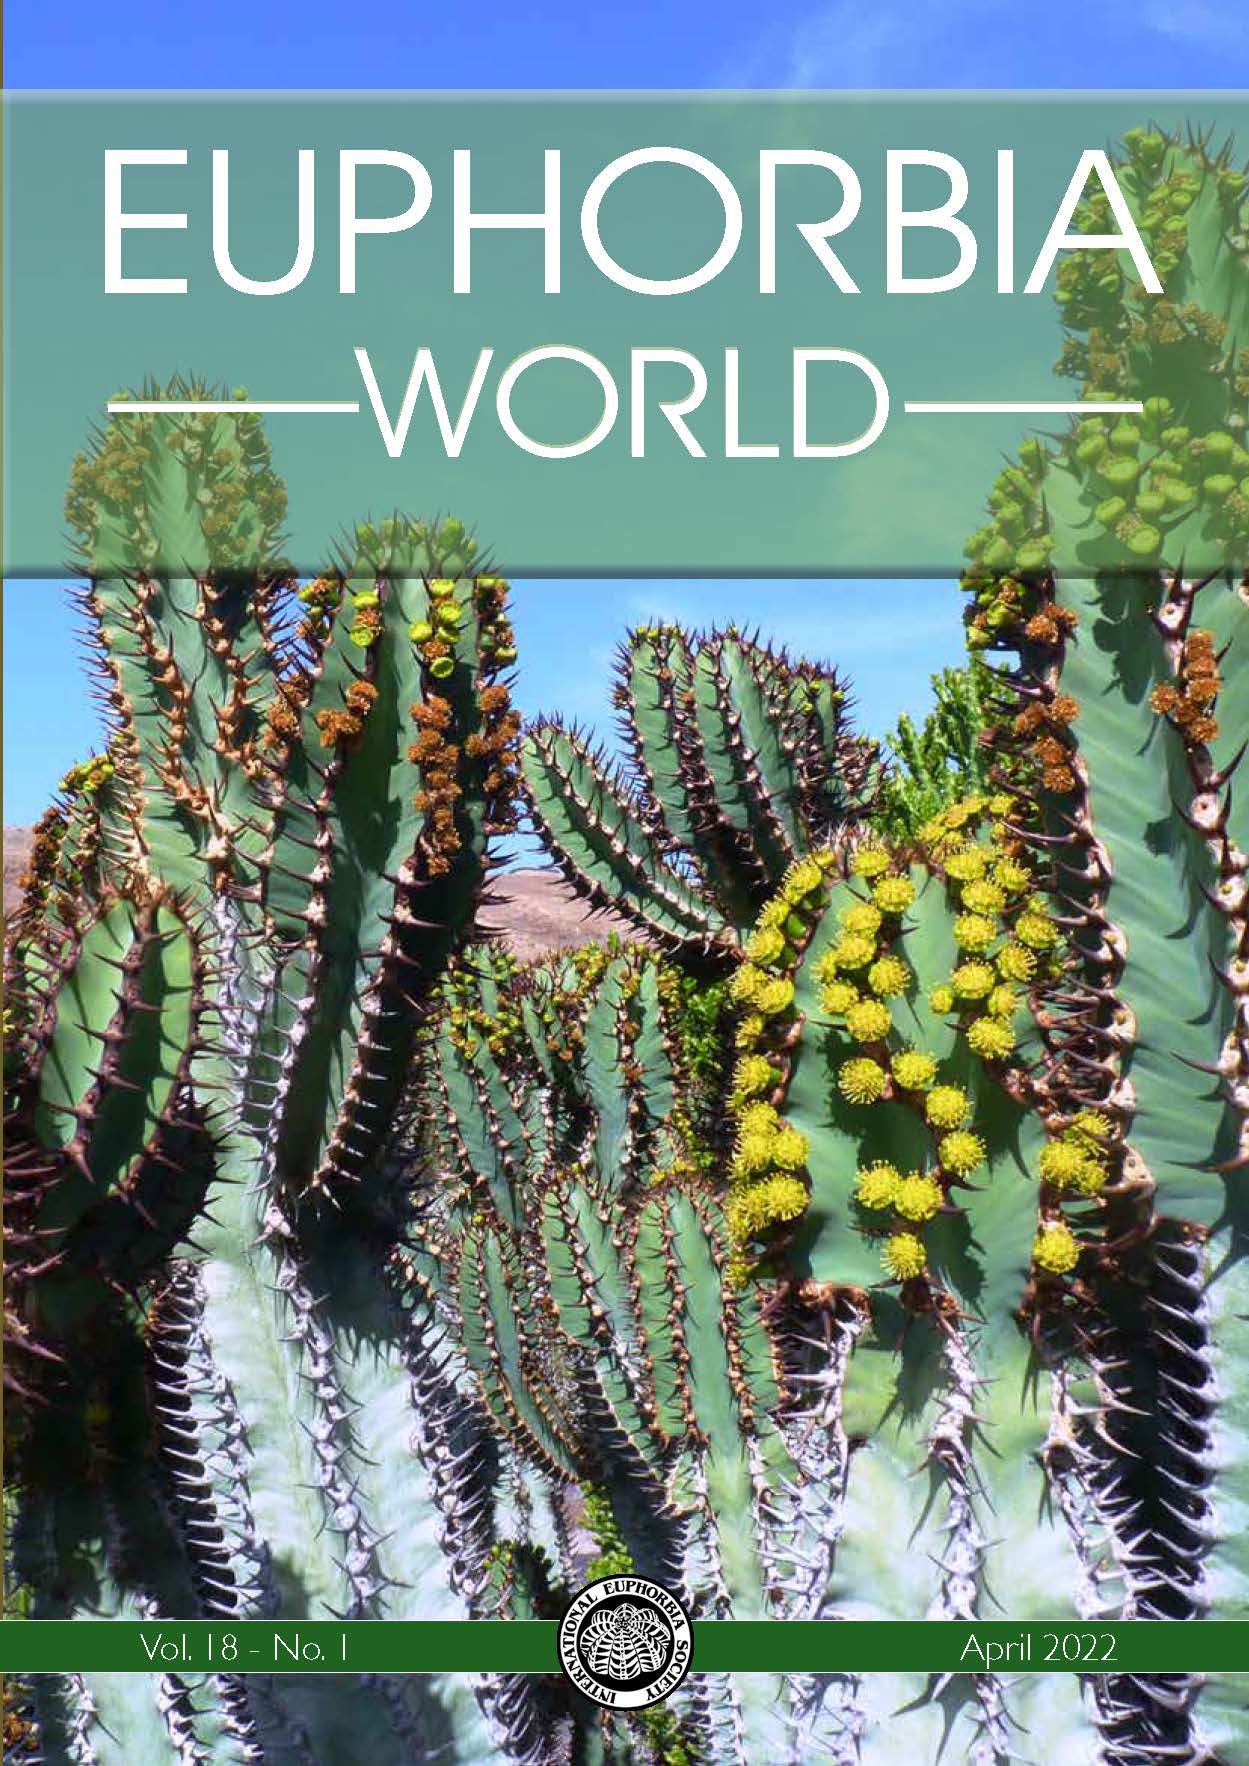 Title  Euphorbia World 15(1)